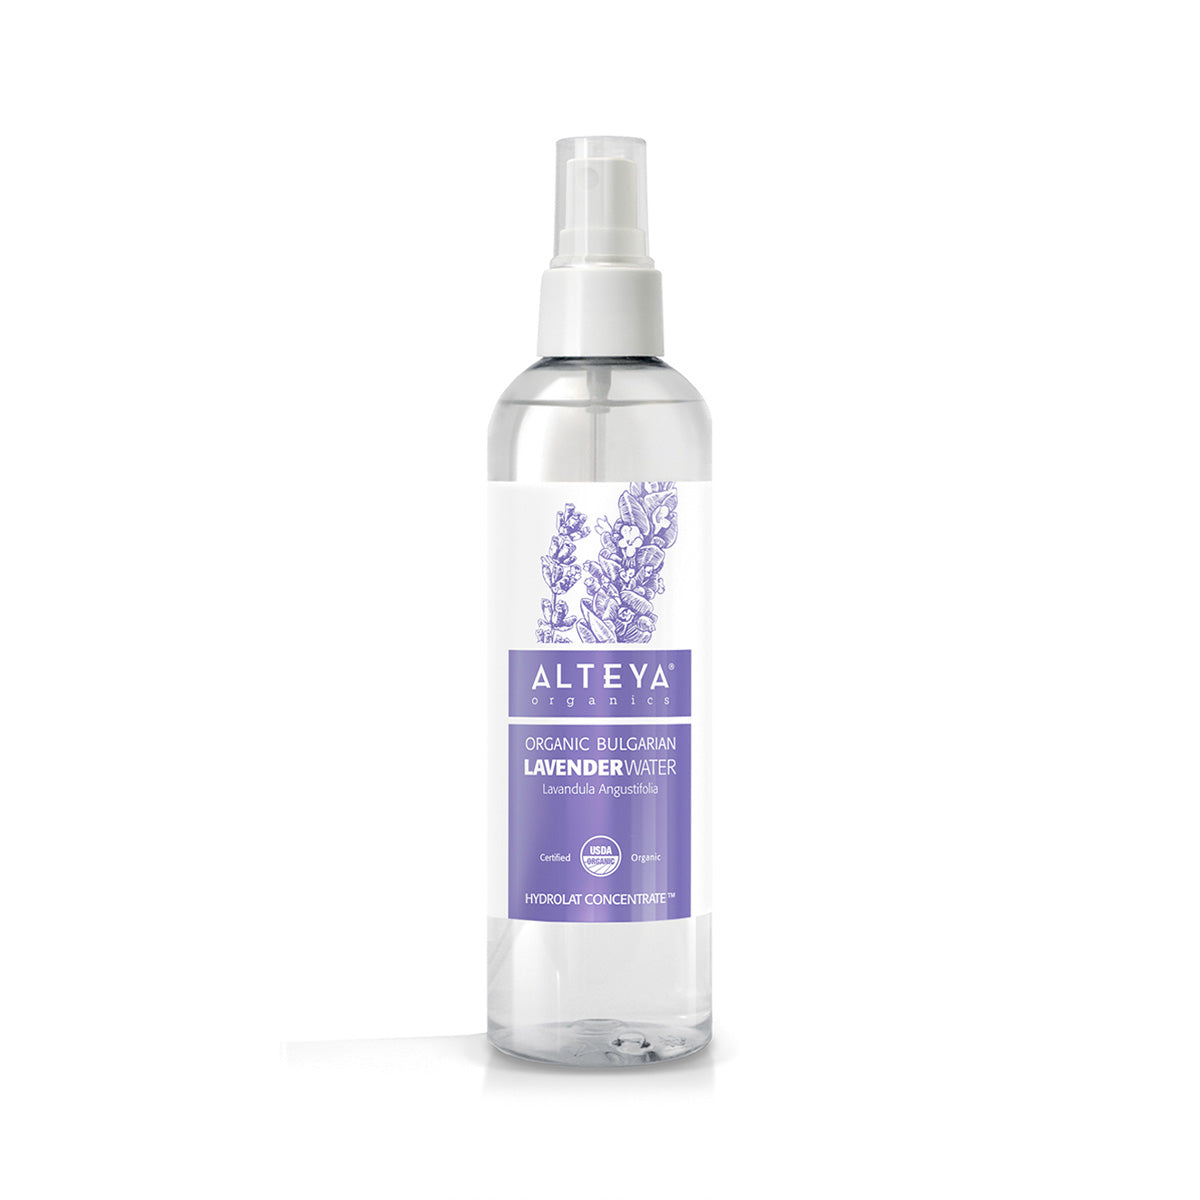 An Alteya Organics Bulgarian Lavender Water 8.5 Fl Oz Spray bottle on a white background.